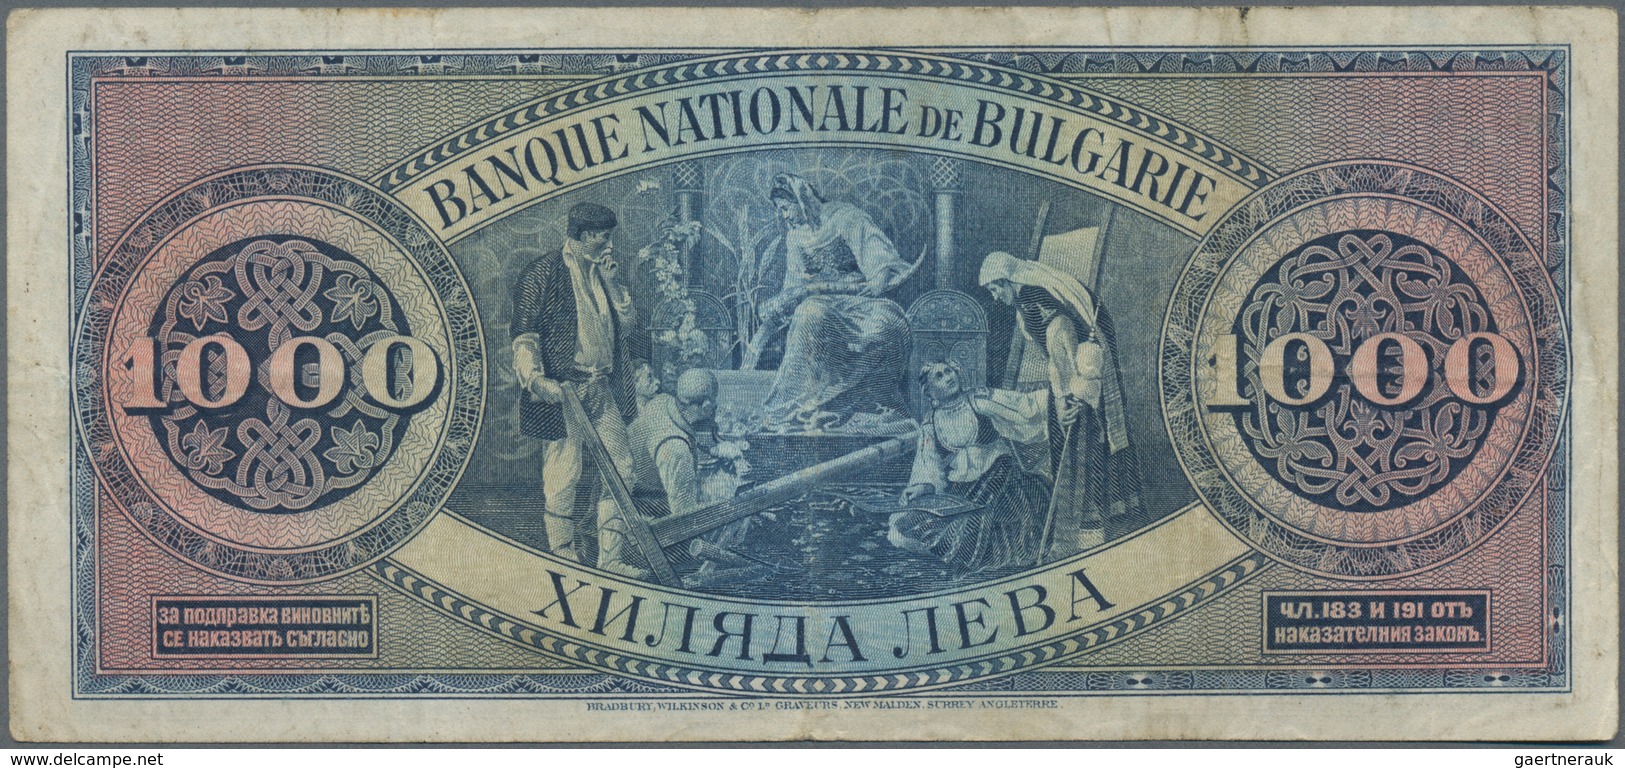 Bulgaria / Bulgarien: 1000 Leva 1925, P.48, Nice Original Shape With Several Folds And Lightly Toned - Bulgaria